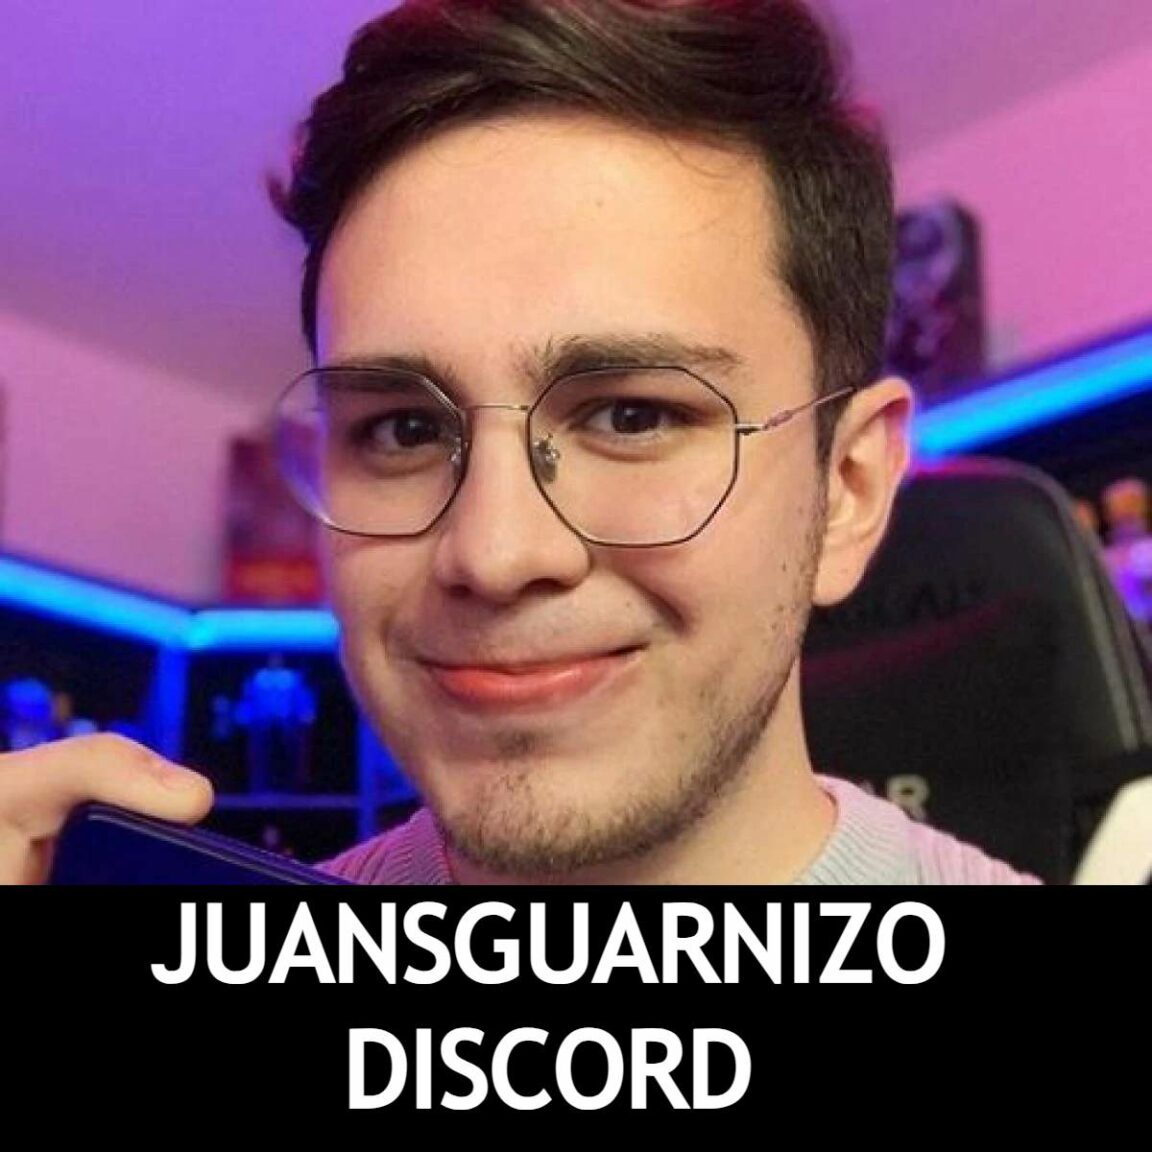 Juansguarnizo discord